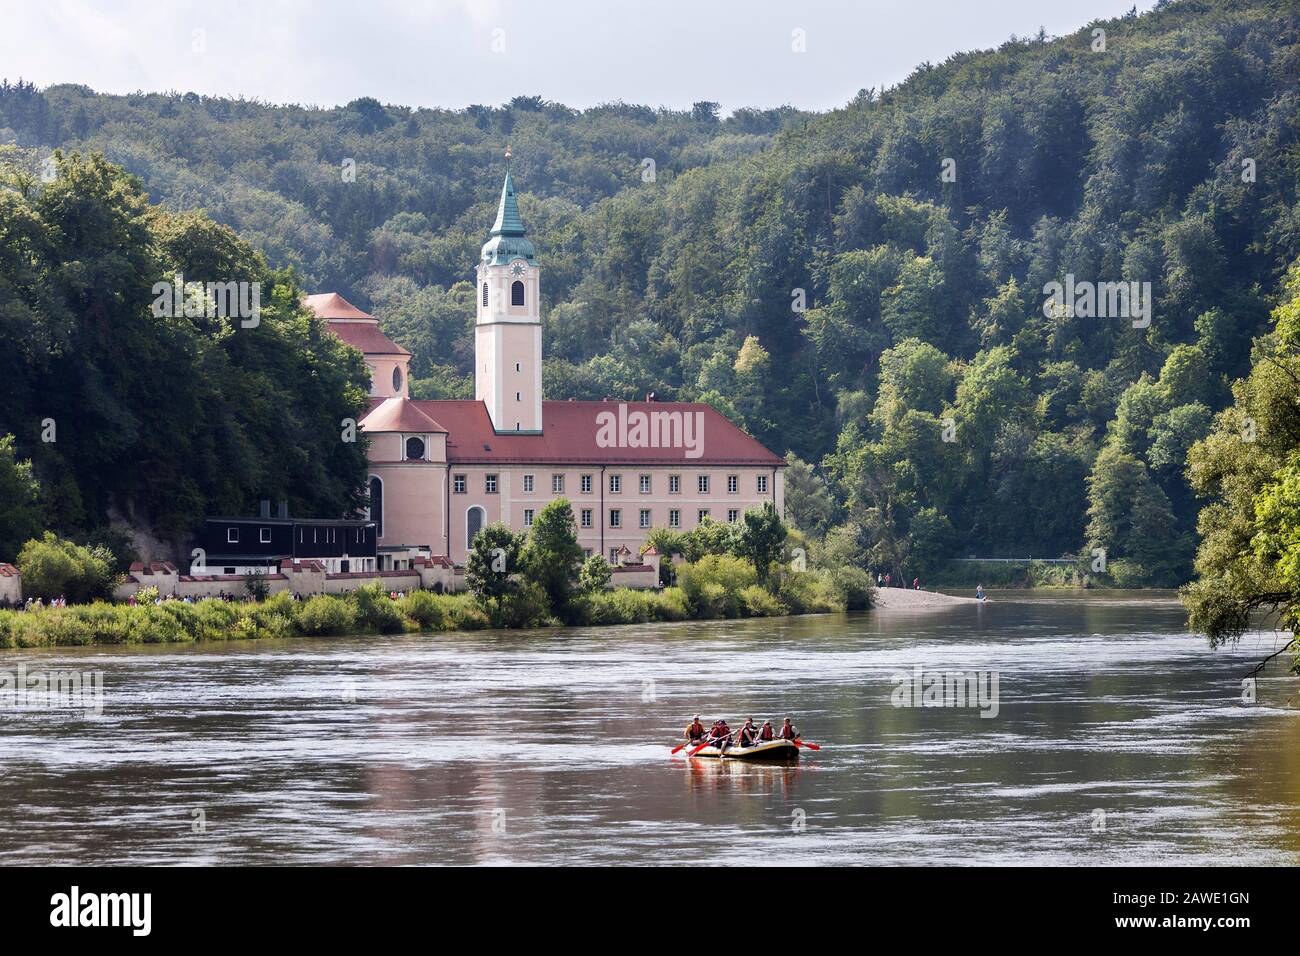 Danube breakthrough, Weltenburg Monastery, Germany Stock Photo